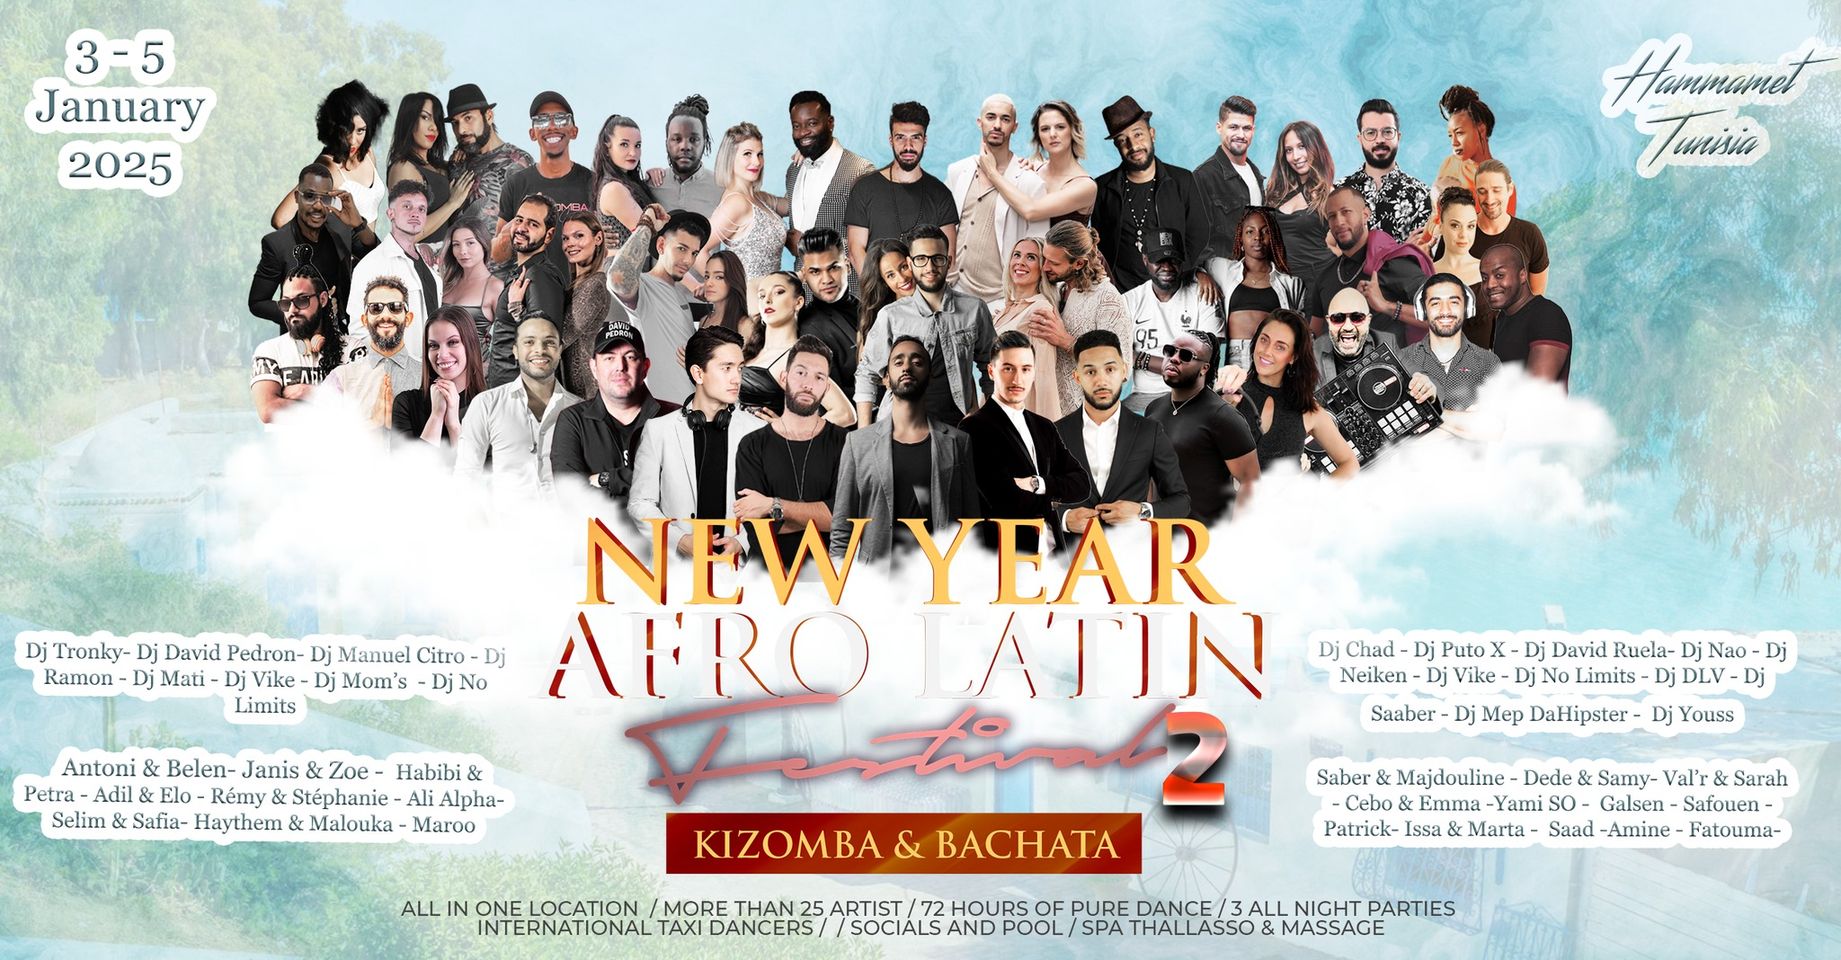 New Year Afro Latin 2 Kizomba & Bachata